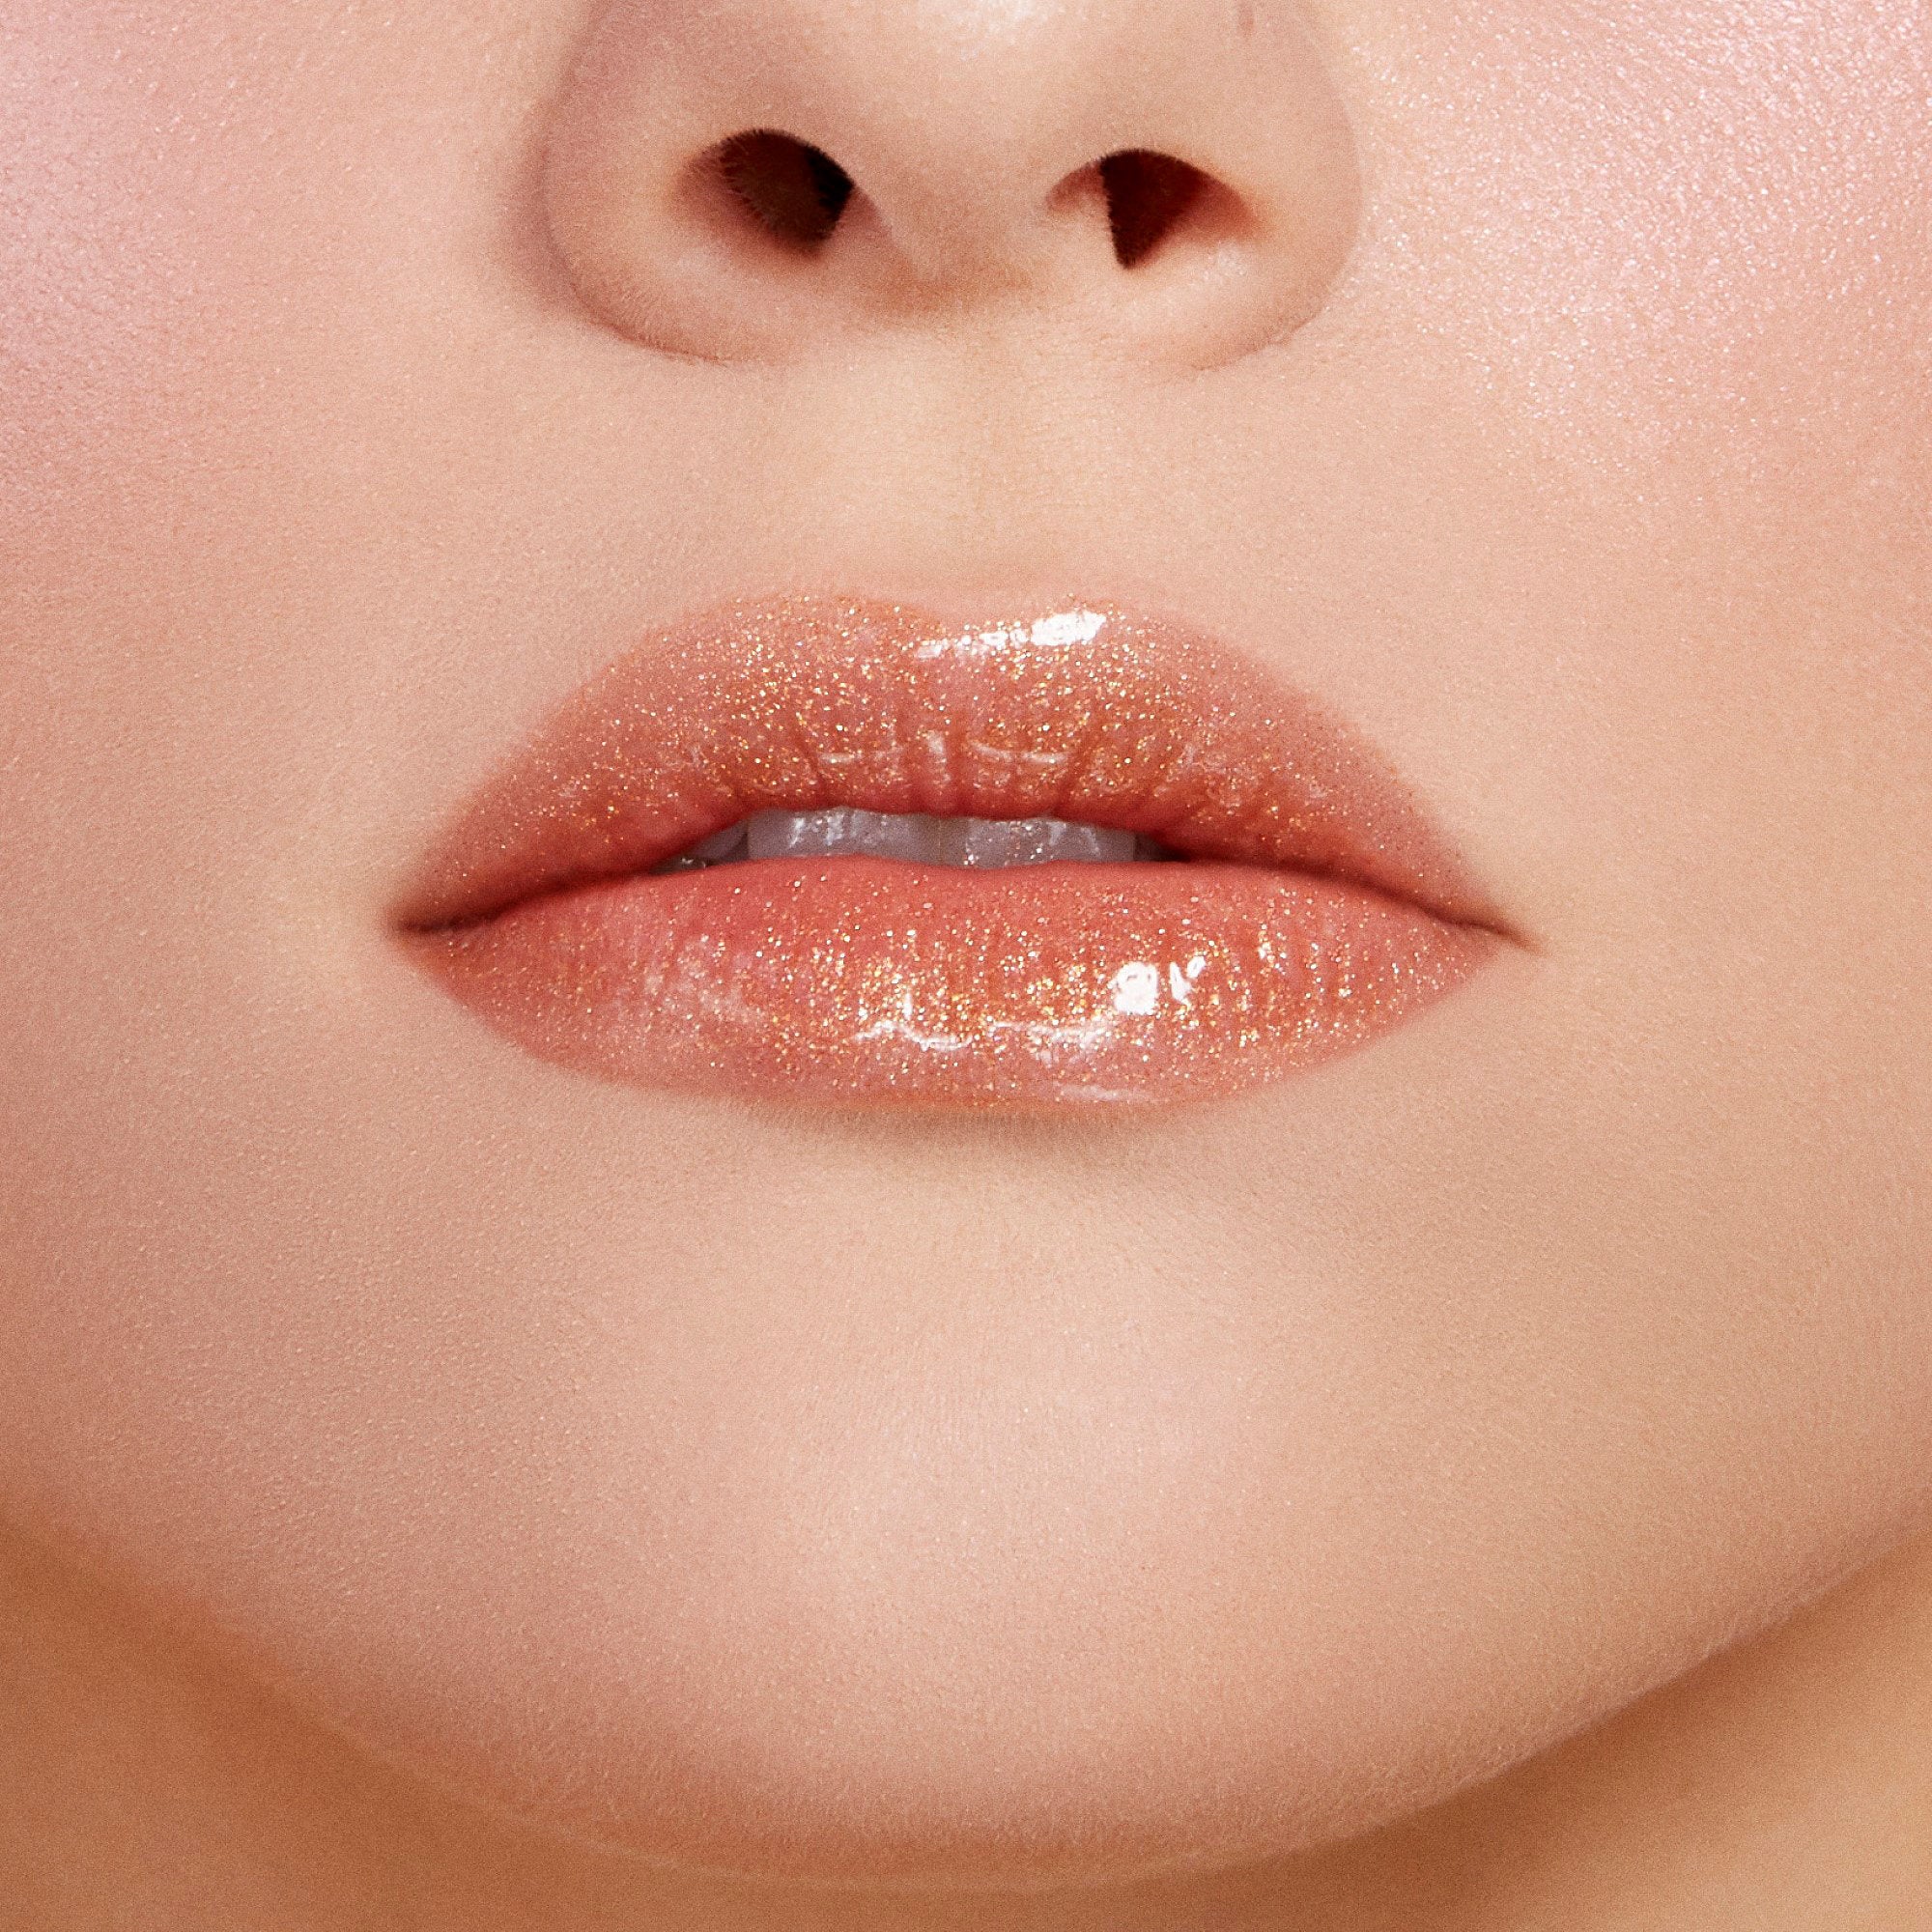 Rich & Dazzling High-Shine Sparkling Lip Gloss "Sunset Crush"